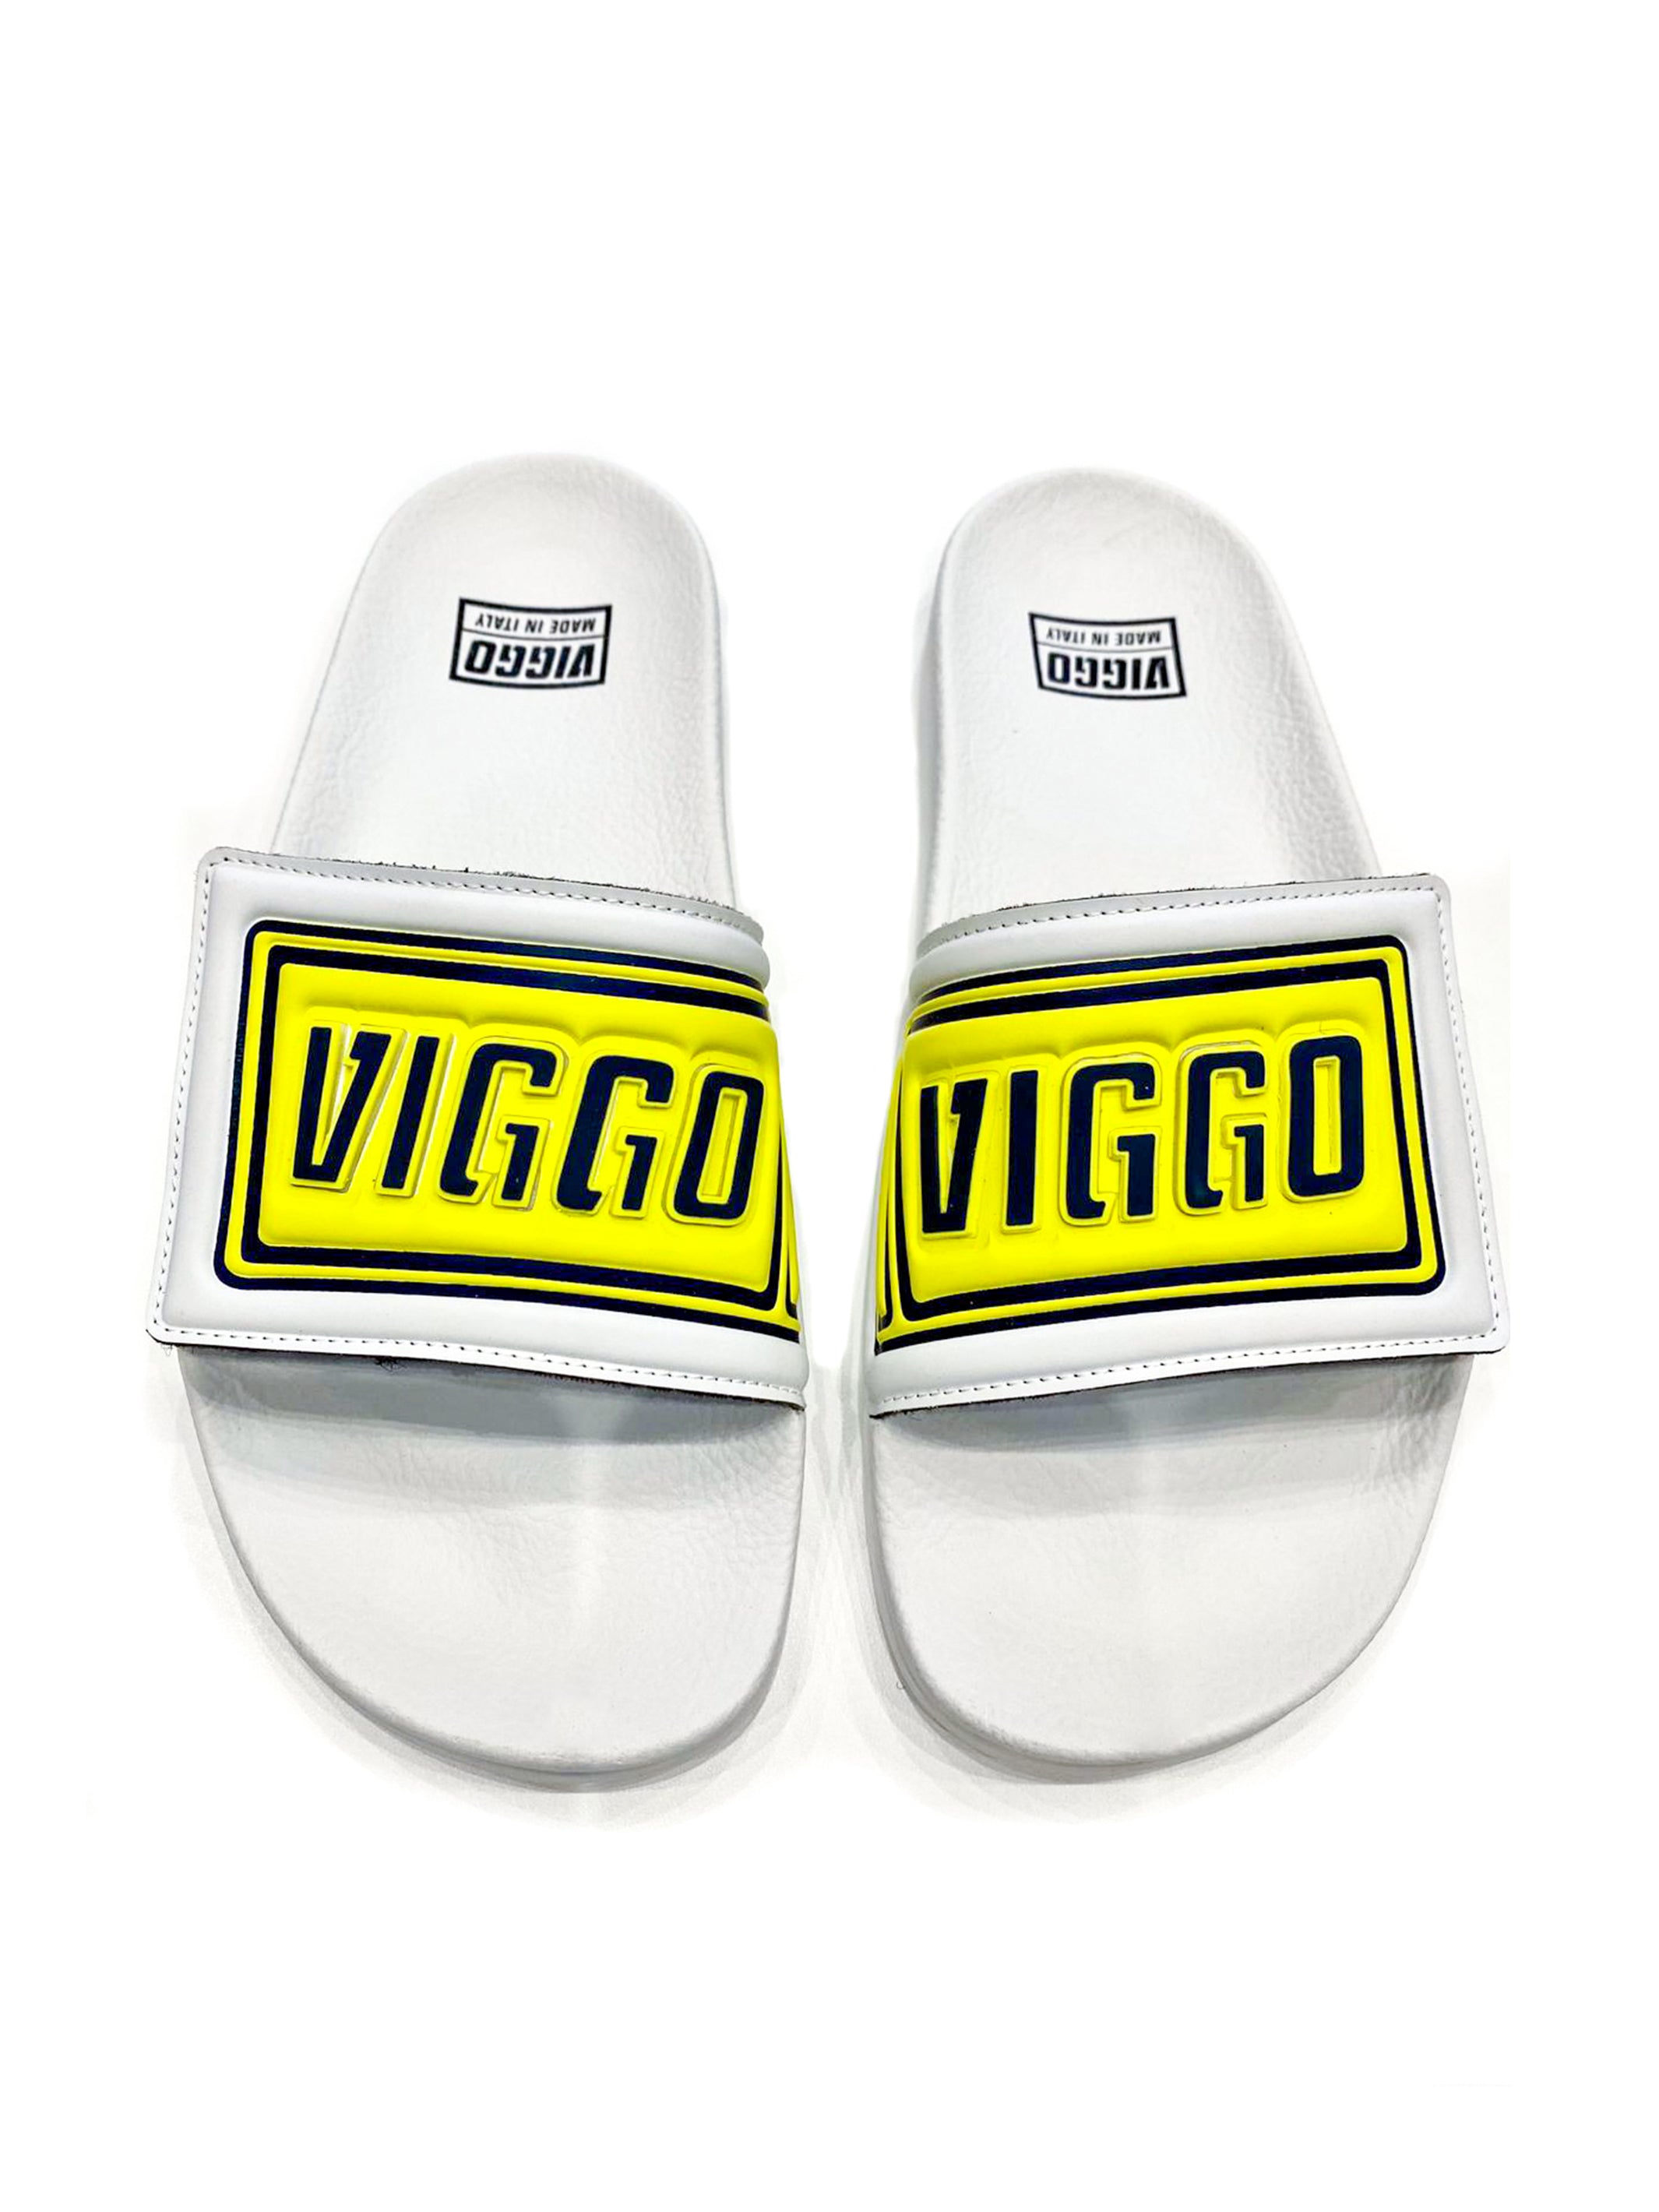 Flip flops with adjustable yellow velcro